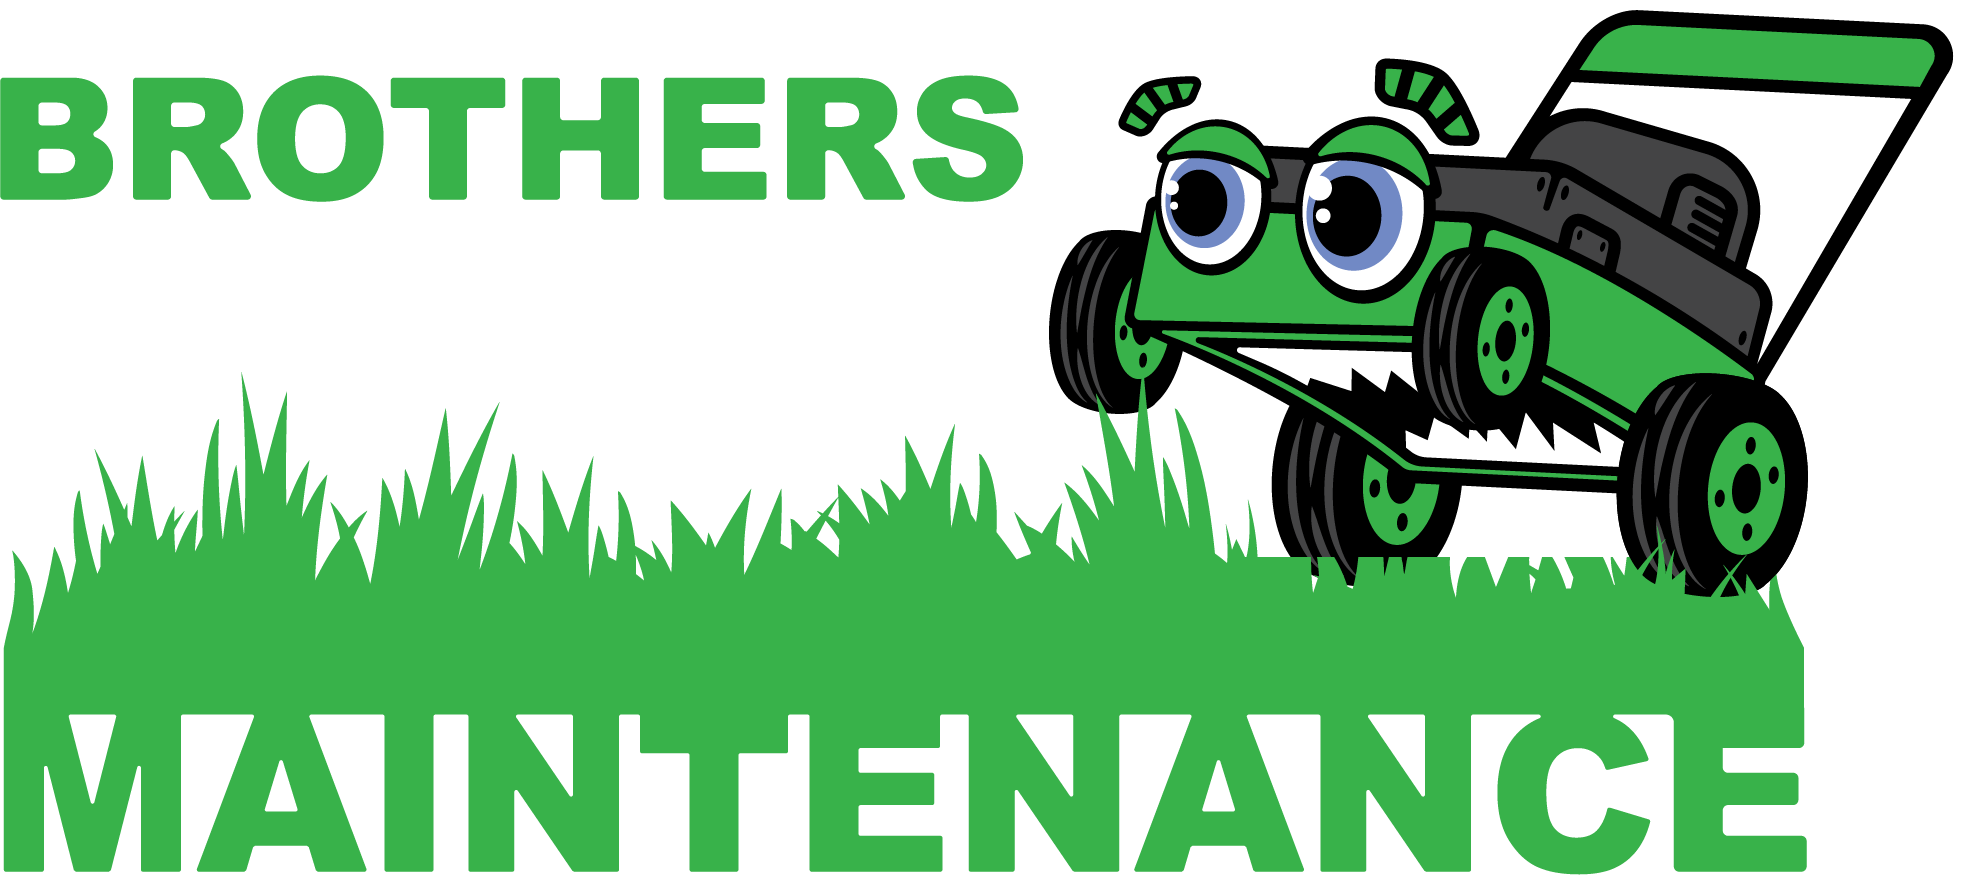 Brothers Lawn Maintenance Logo